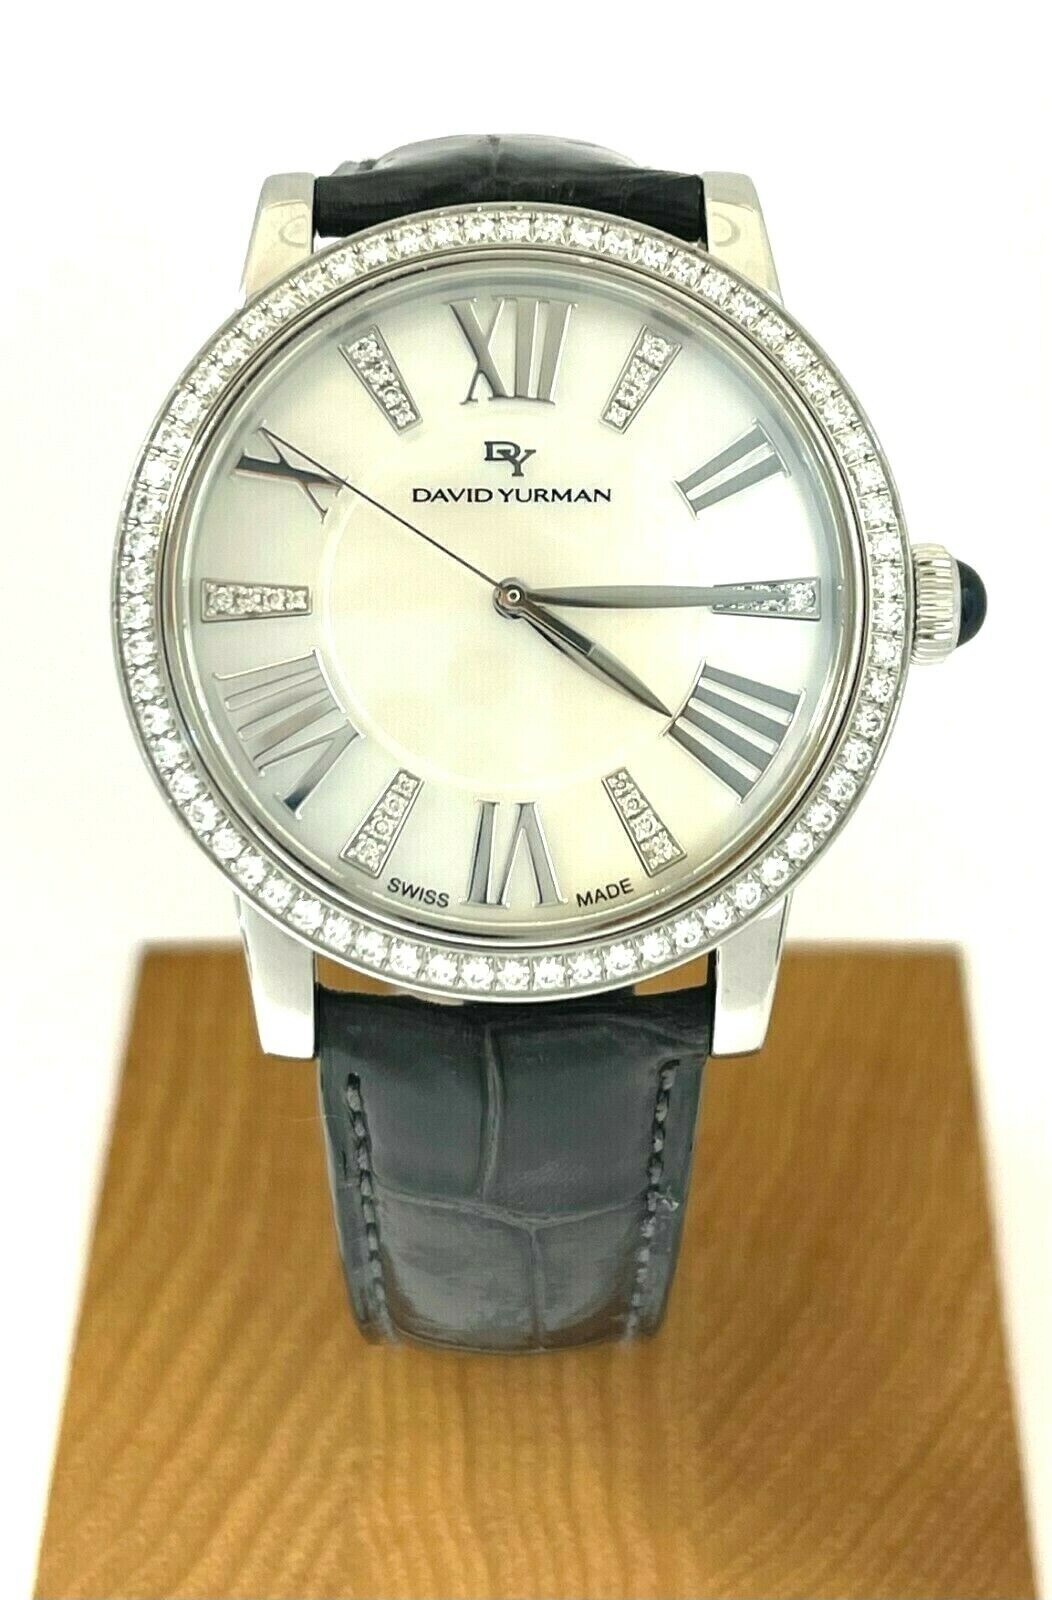 David Yurman Diamonds & Mother of Pearl Watch - 38mm - T 716 - Retail $6800.00